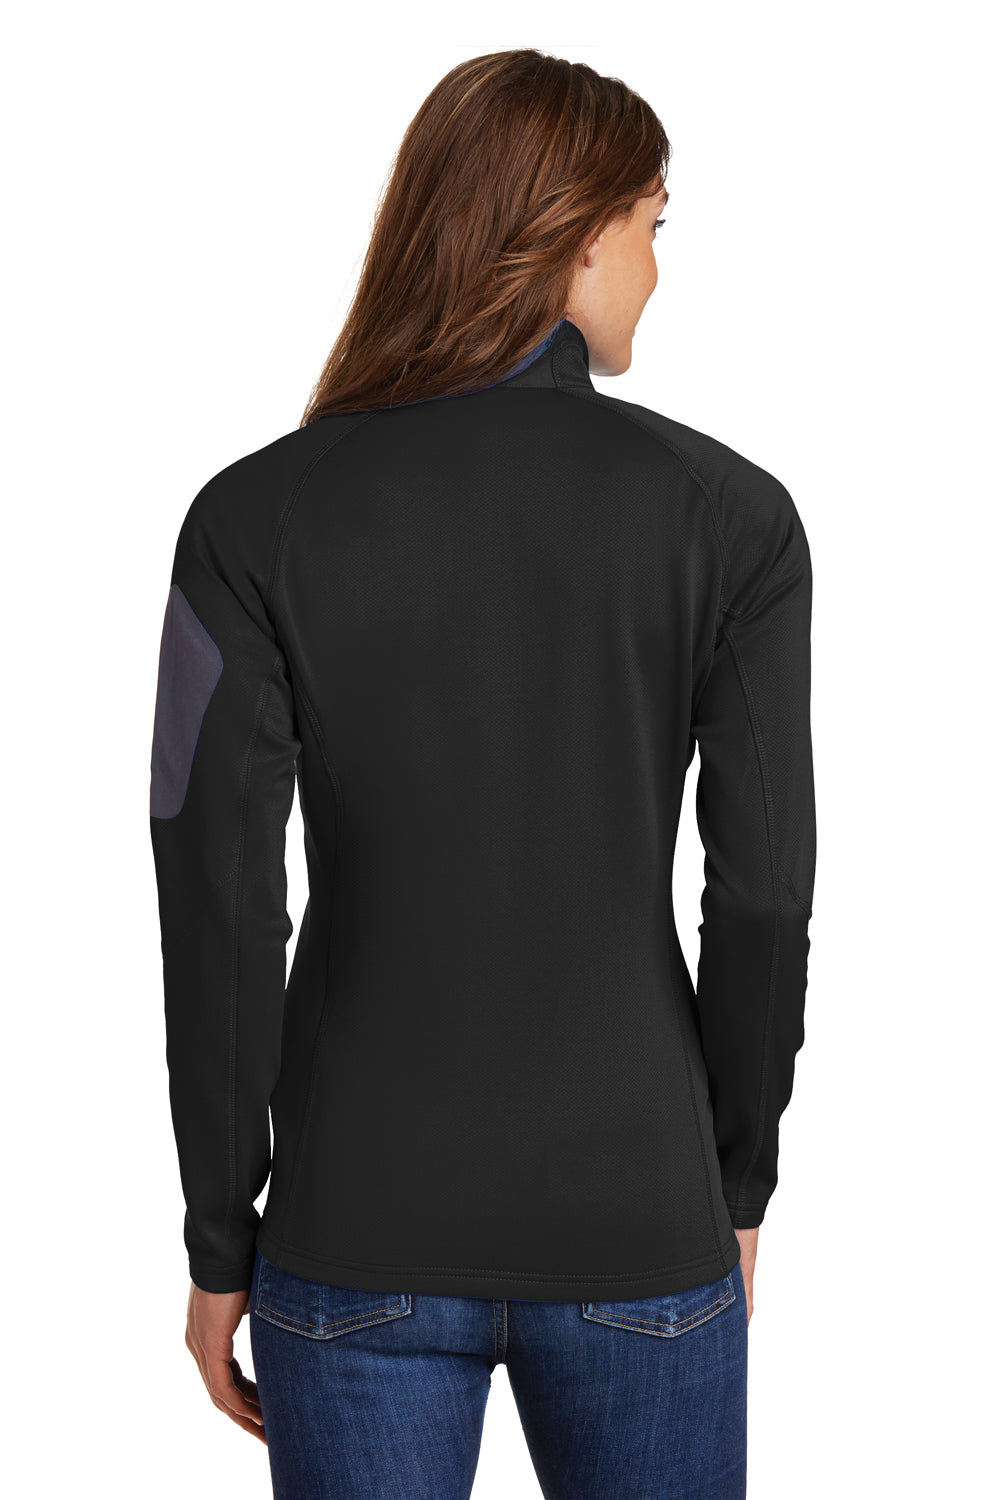 Eddie Bauer EB235 Womens Performance Fleece 1/4 Zip Sweatshirt Black Model Back